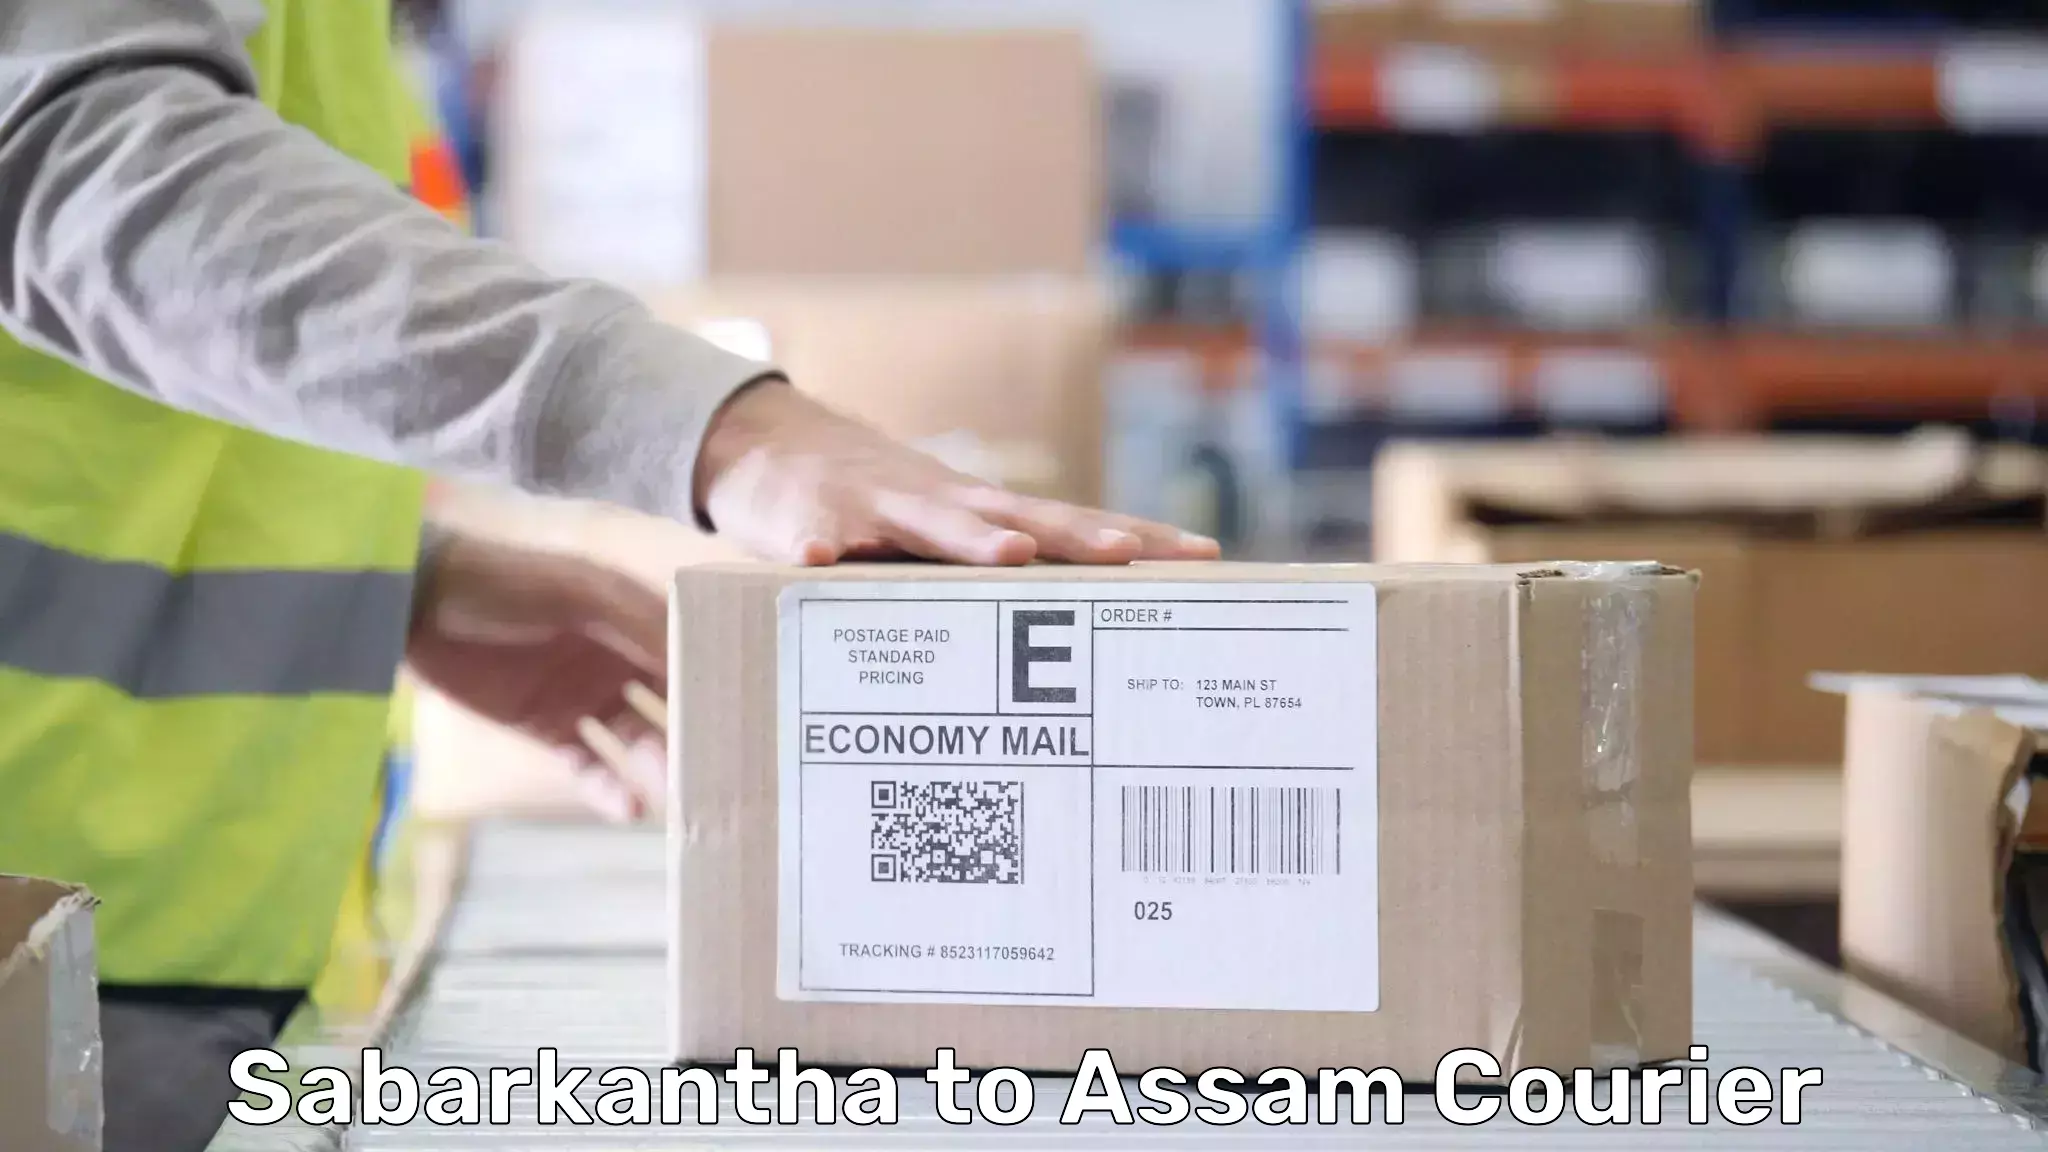 Luggage delivery app Sabarkantha to Lala Assam